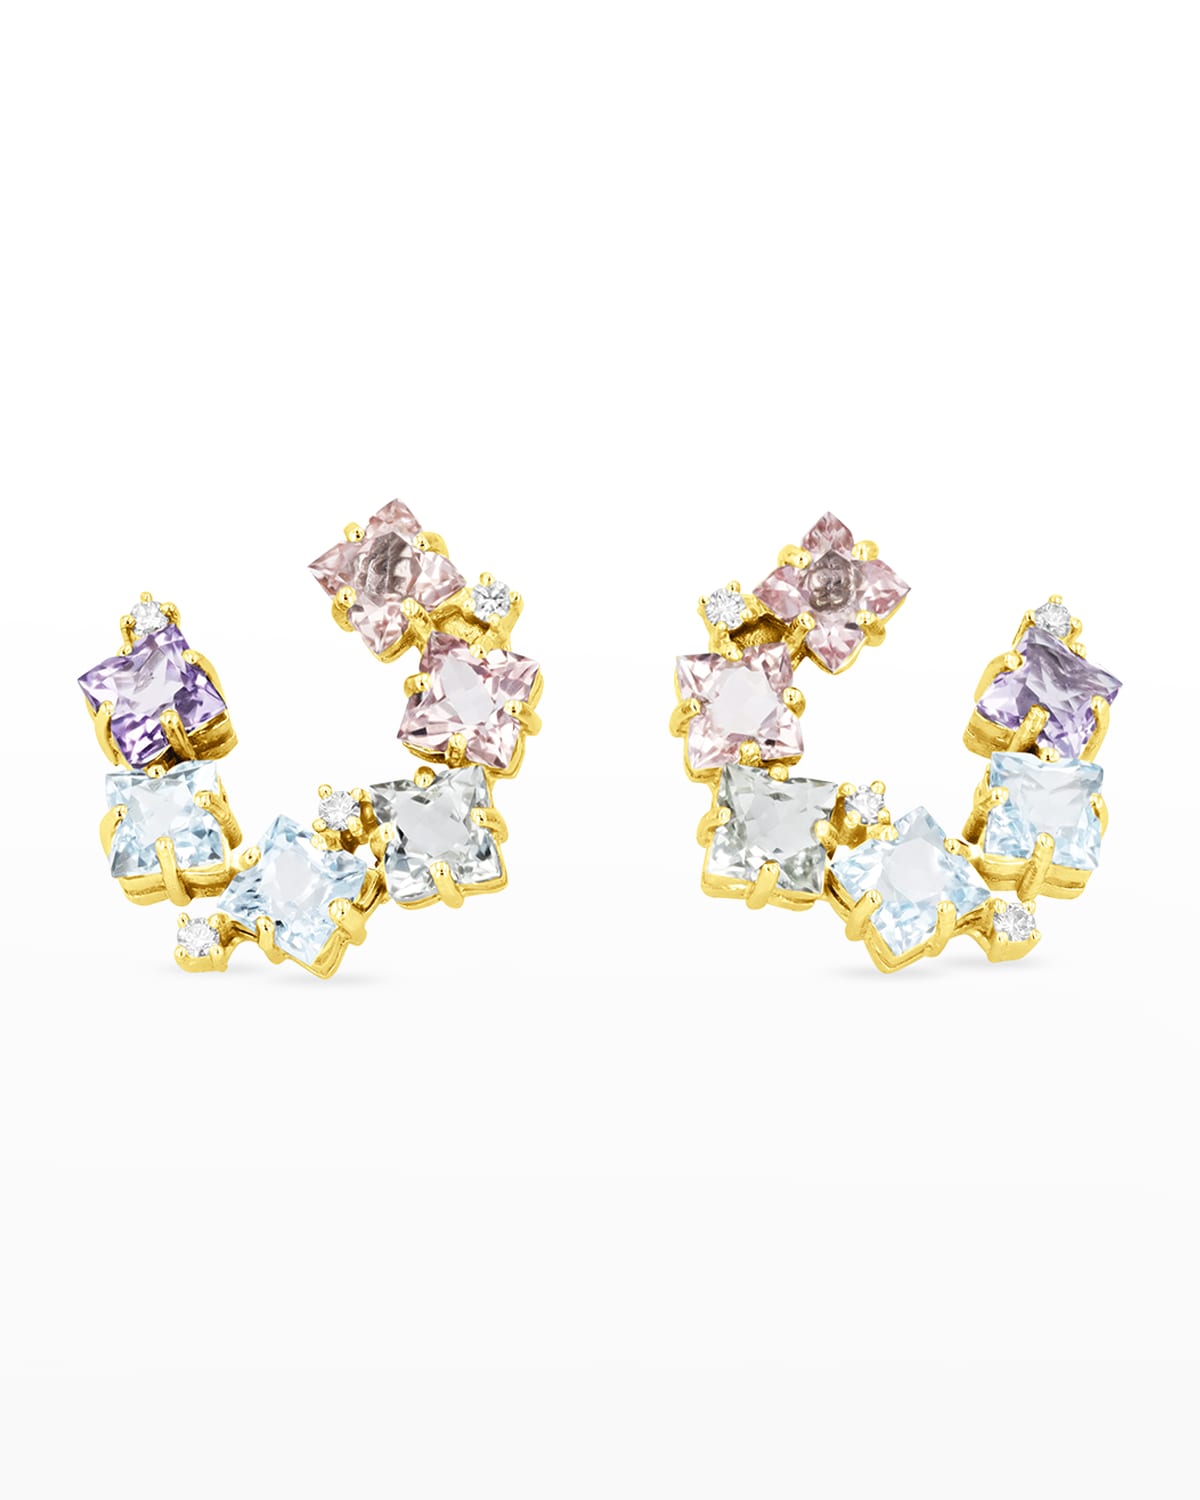 KALAN by Suzanne Kalan 14K Gold Clover White Diamond Small Spiral Hoop Earrings